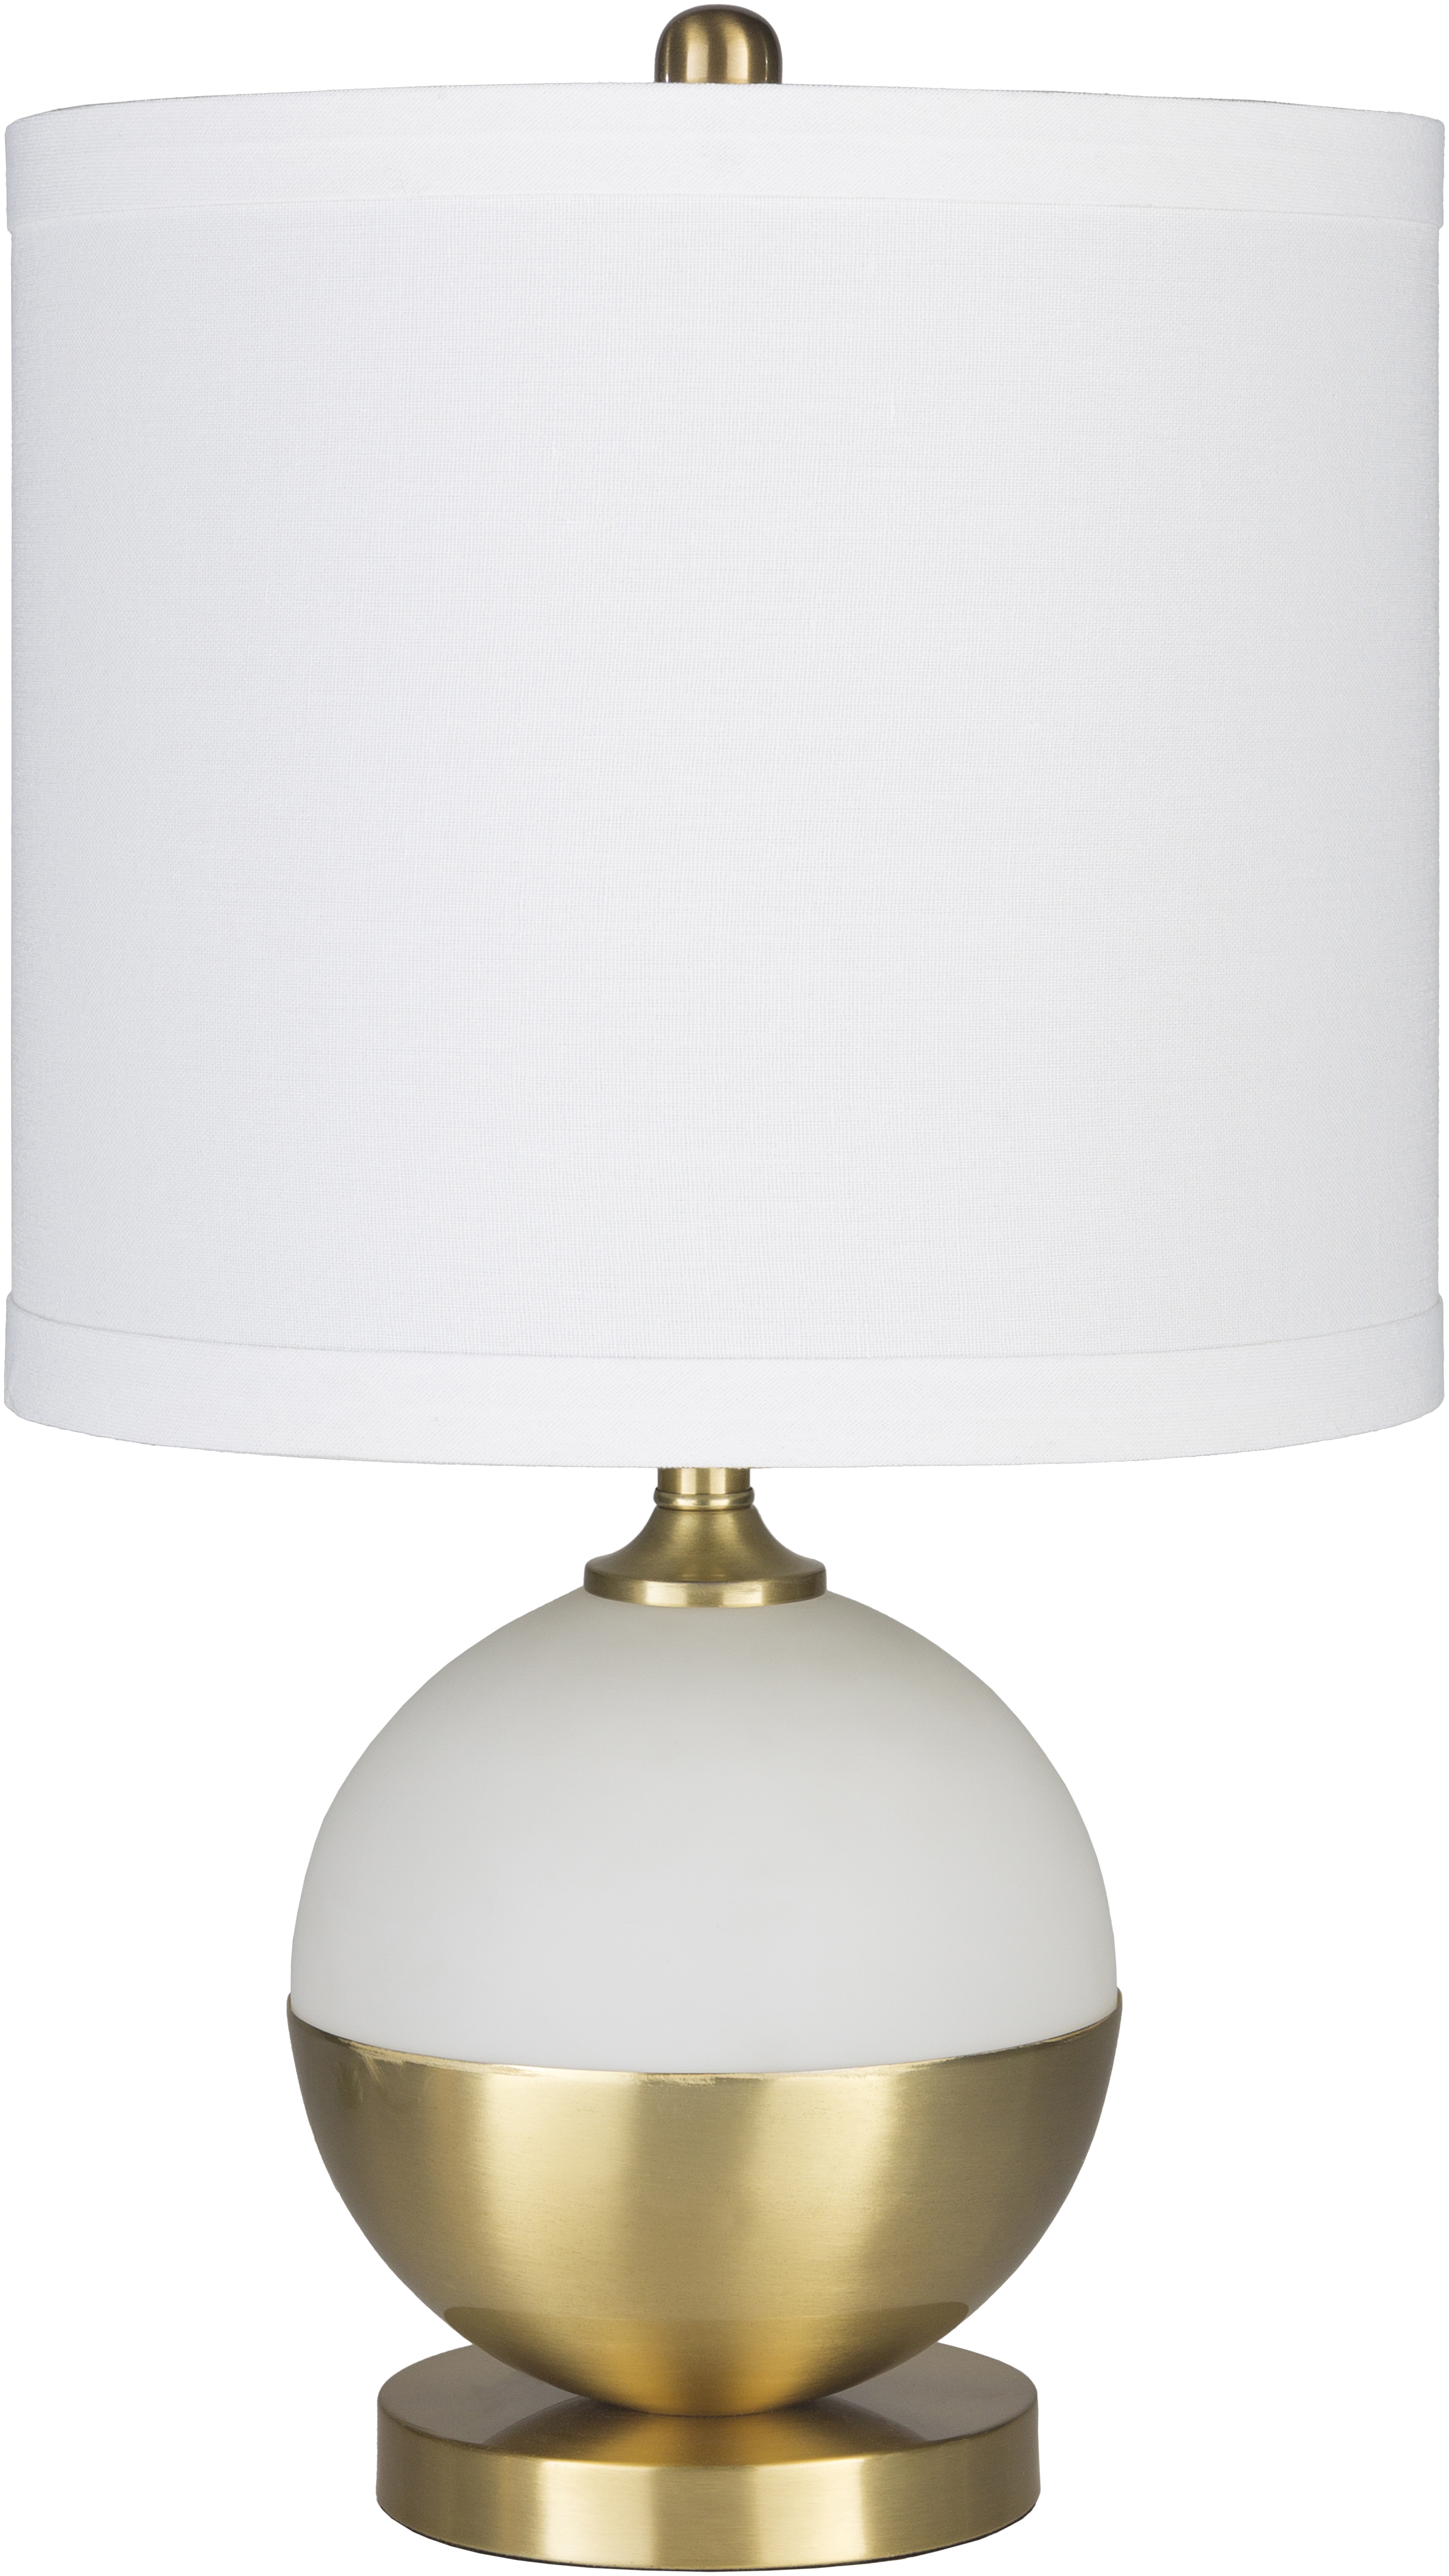 Askew Table Lamp - Image 0